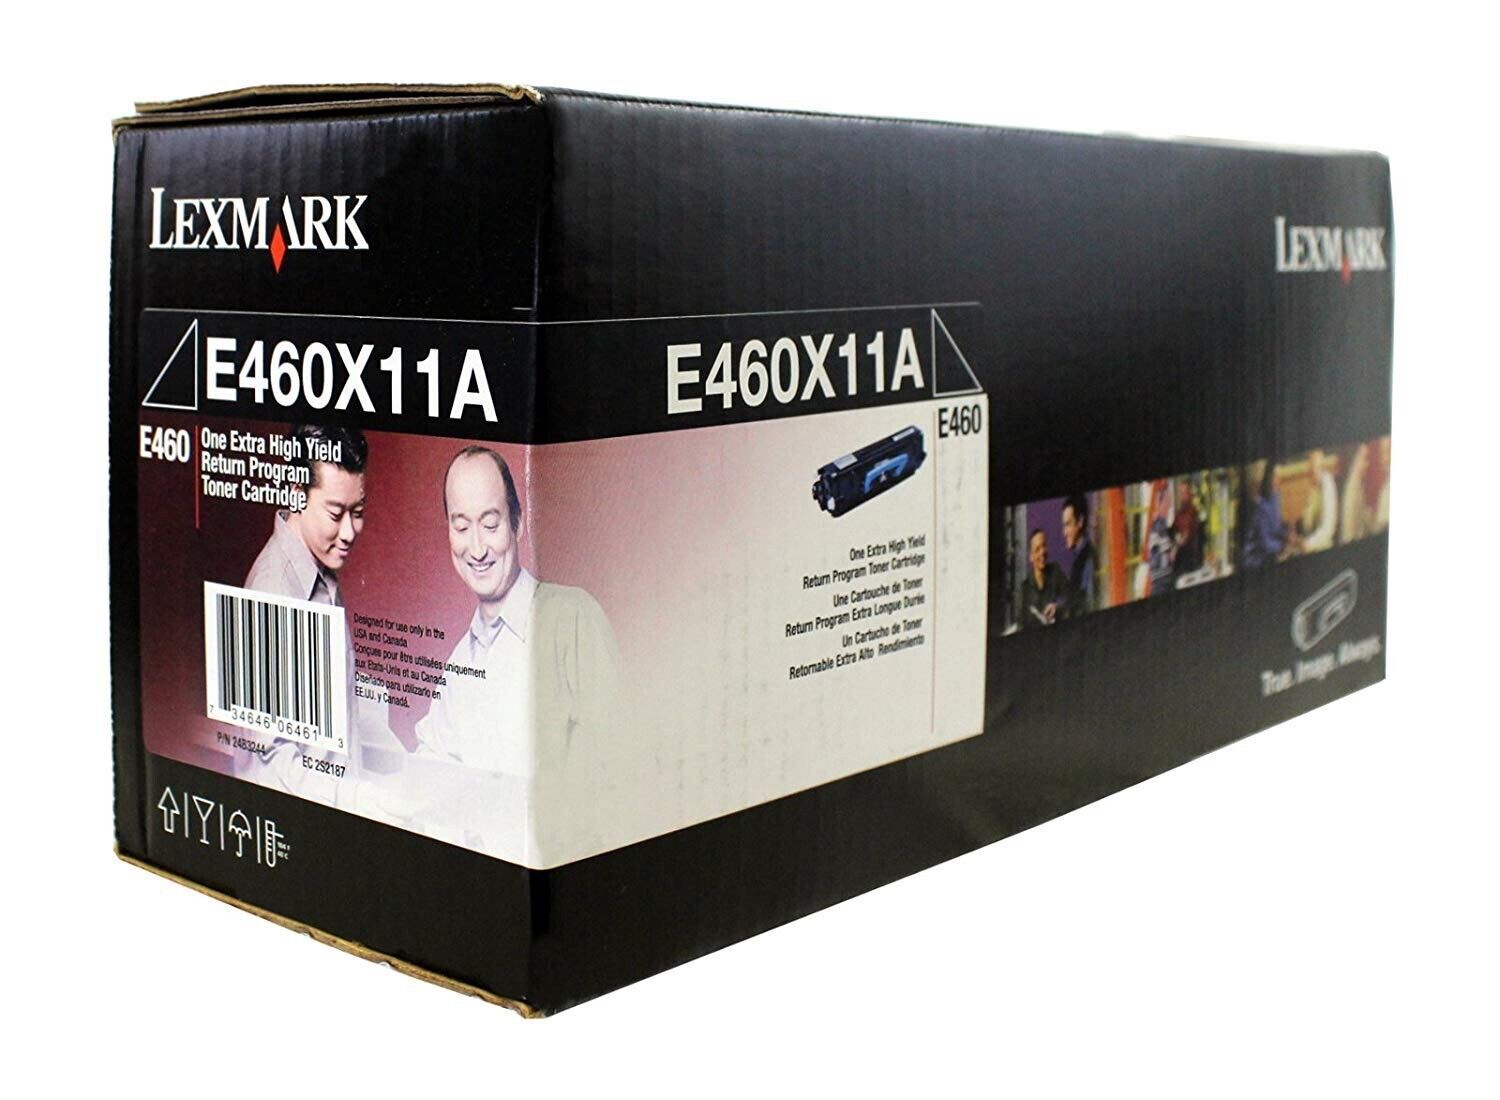 2 PACK DEAL - New in Box - Genuine Lexmark E460X11A High Yeild Black Toner E460